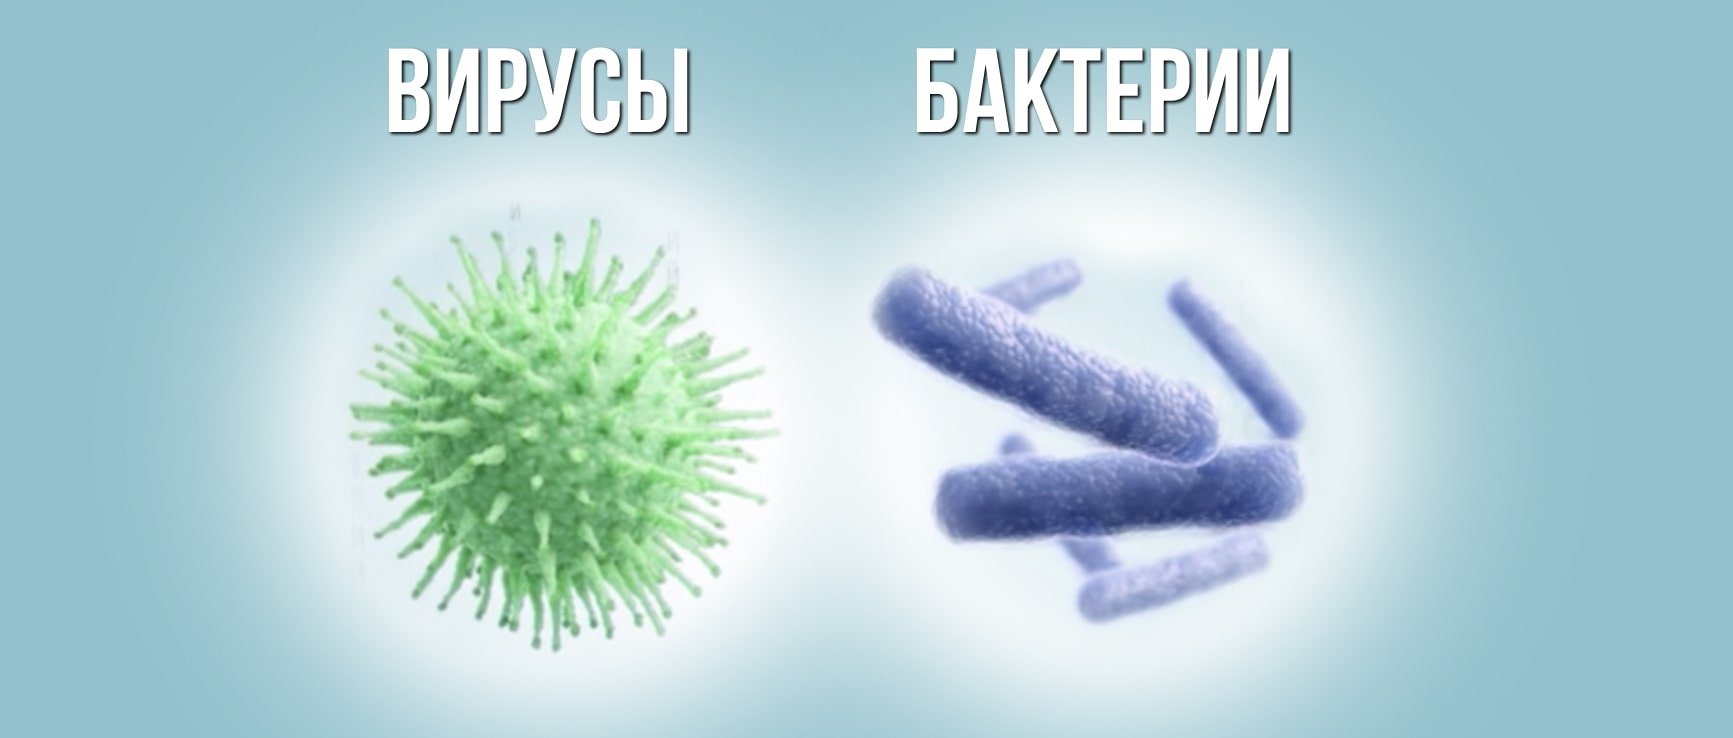 Сравнение бактерий и вирусов. Вирусы и бактерии. Вирусы и бактерии в чем разница. Вирус от бактерии. Вирусы отличаются от бактерий.